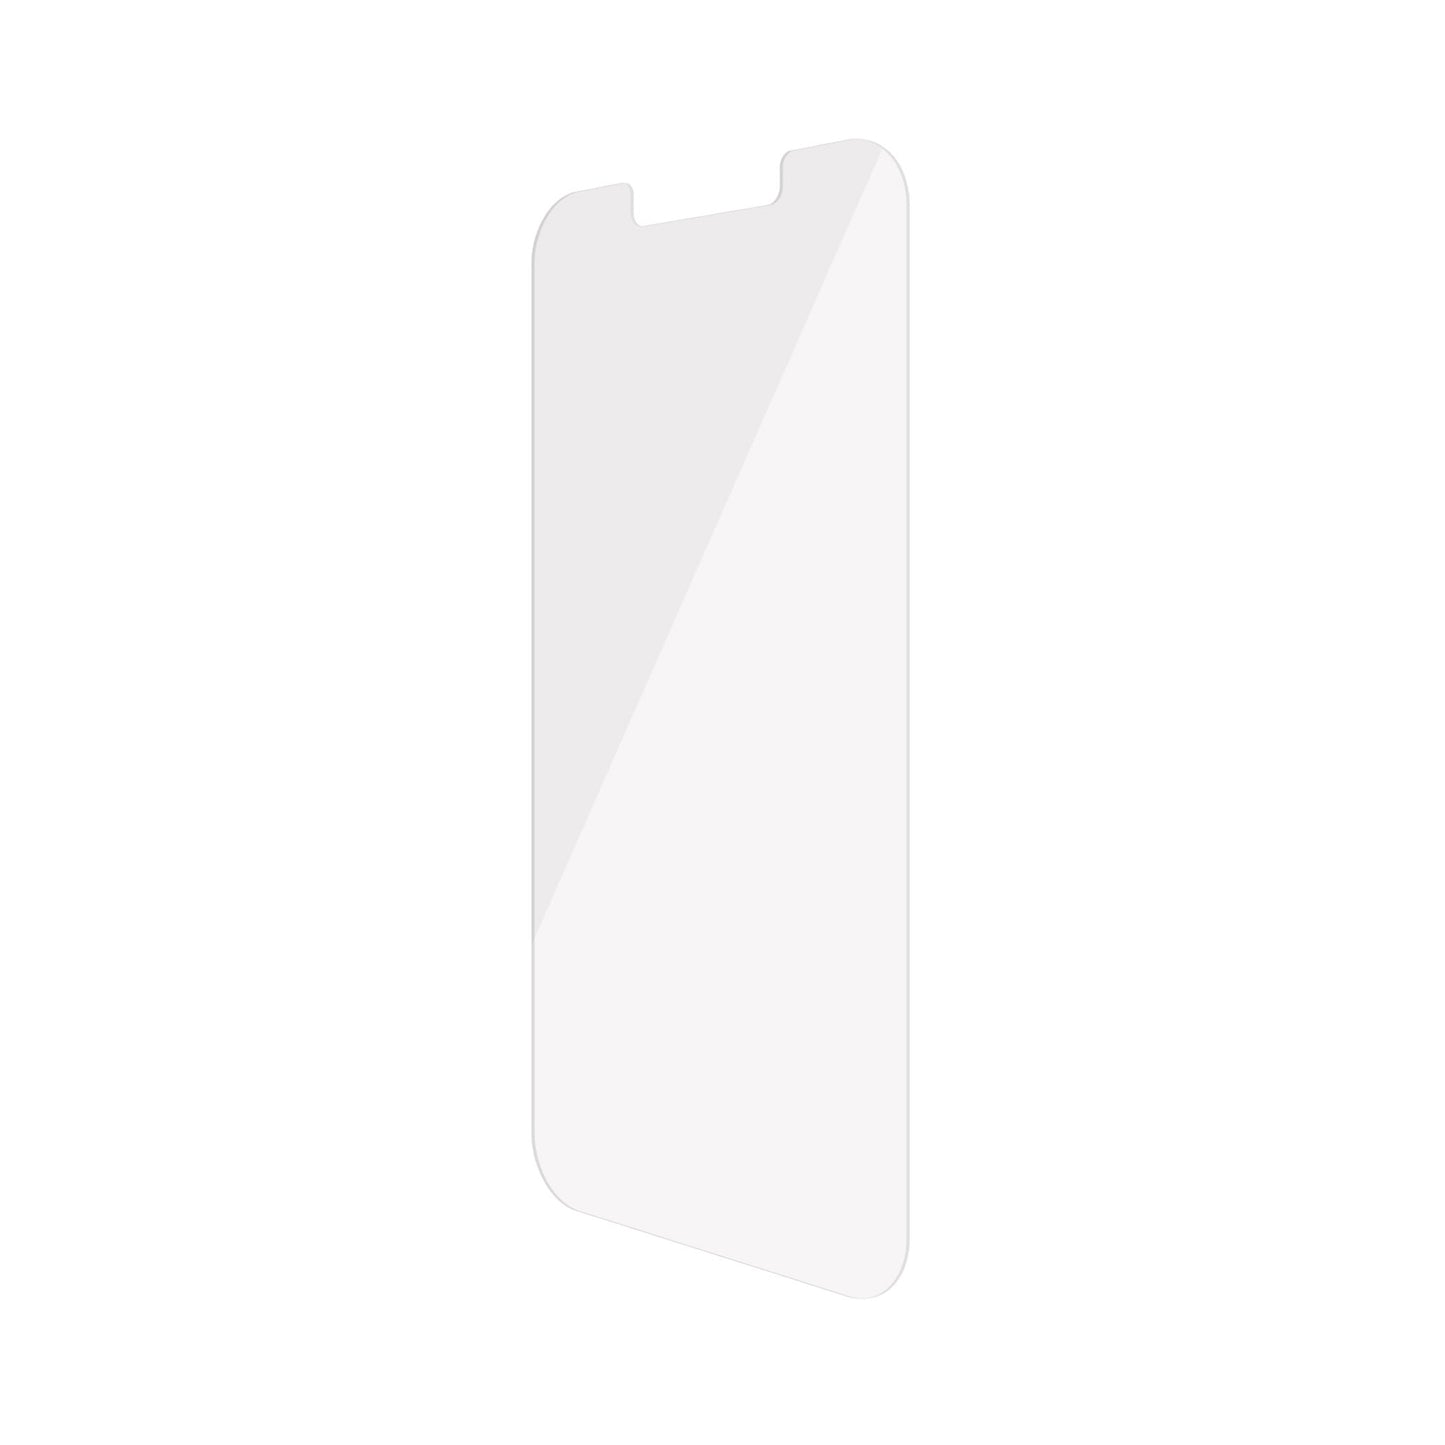 PANZERGLASS Standard Fit for iPhone 13 mini - Clear